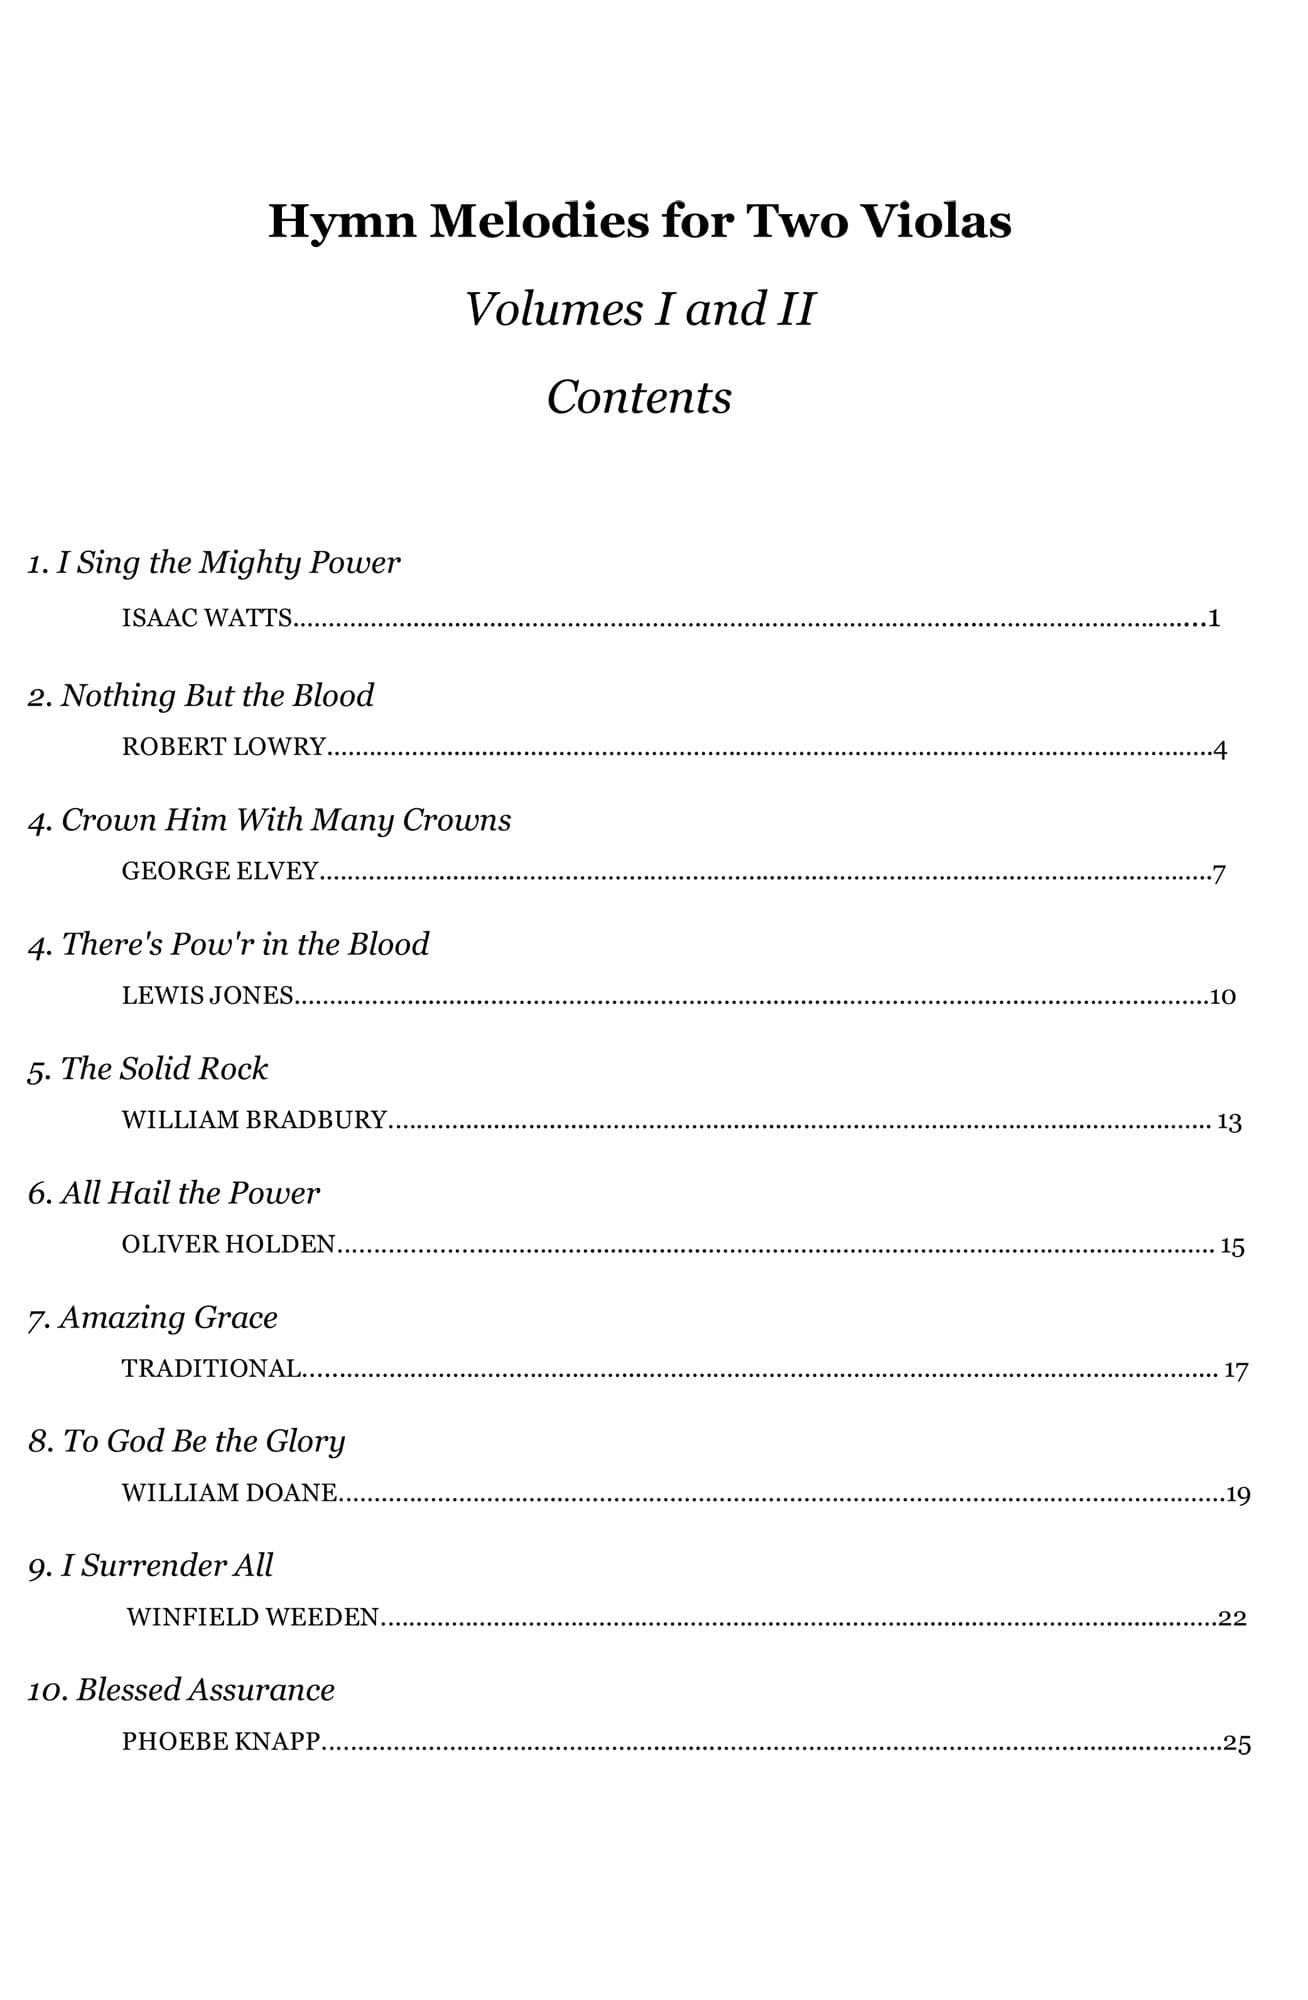 Yasuda, Martha - Hymn Melodies For Two Violas, Volume II - Digital Download